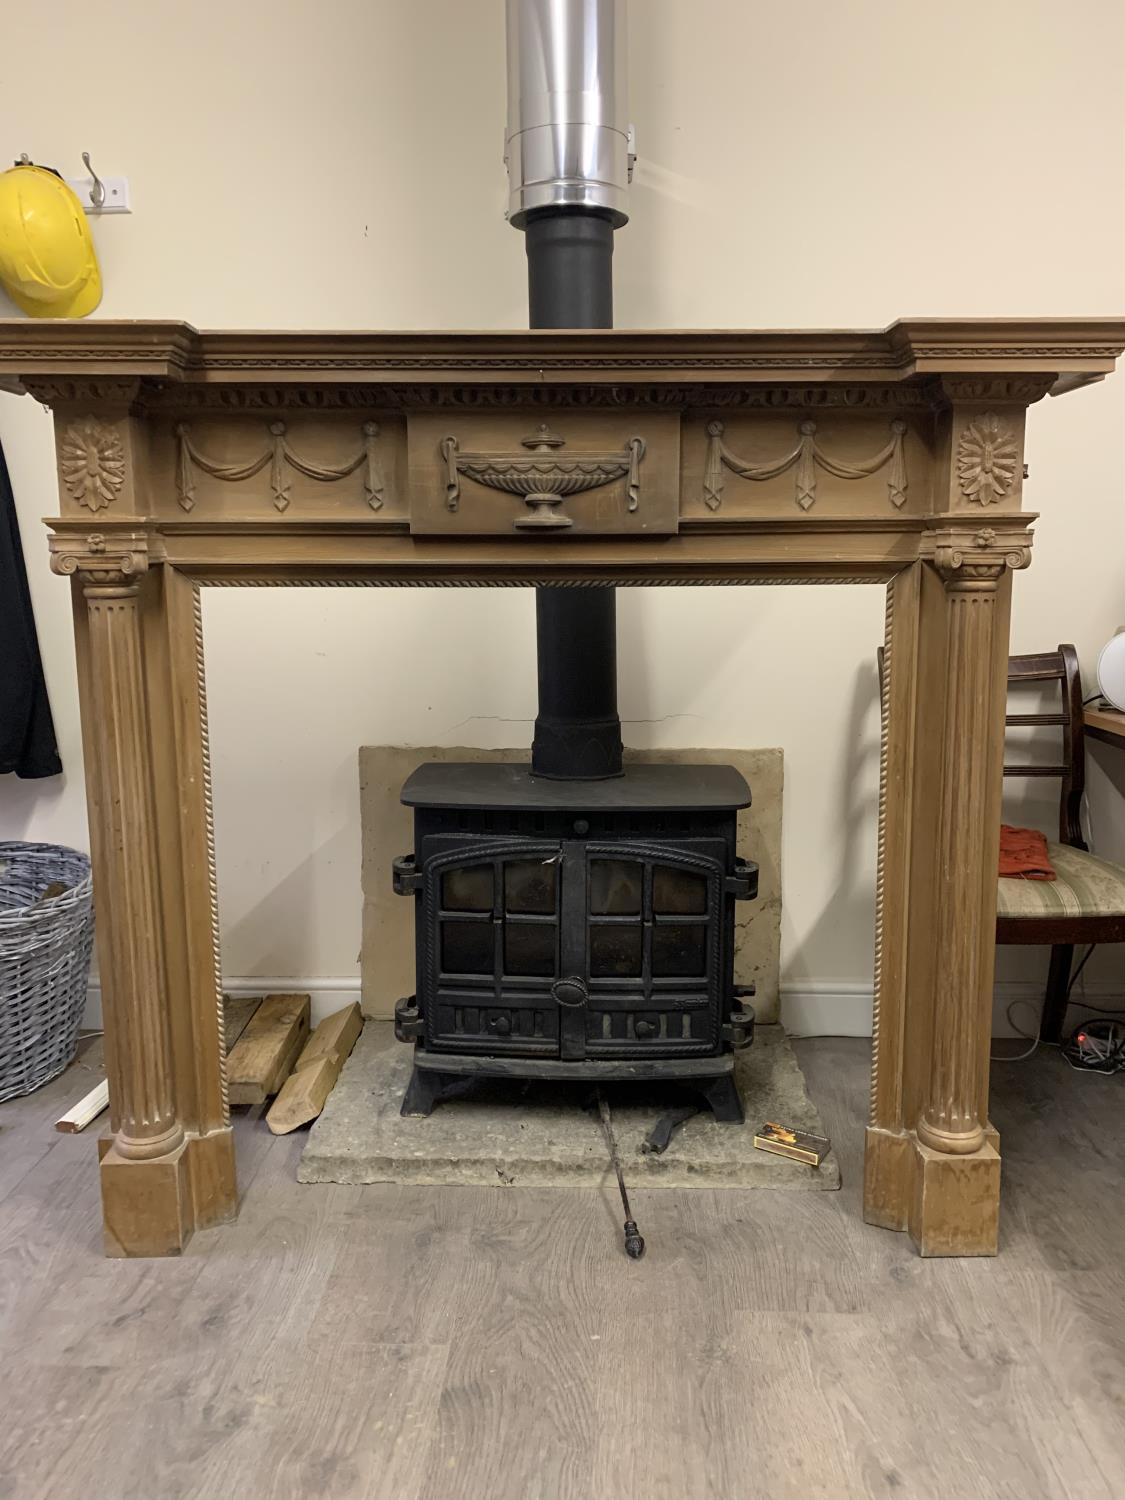 Hallidays "Grosvenor" fire surround. Modern carved pine traditional Adam style fireplace surround